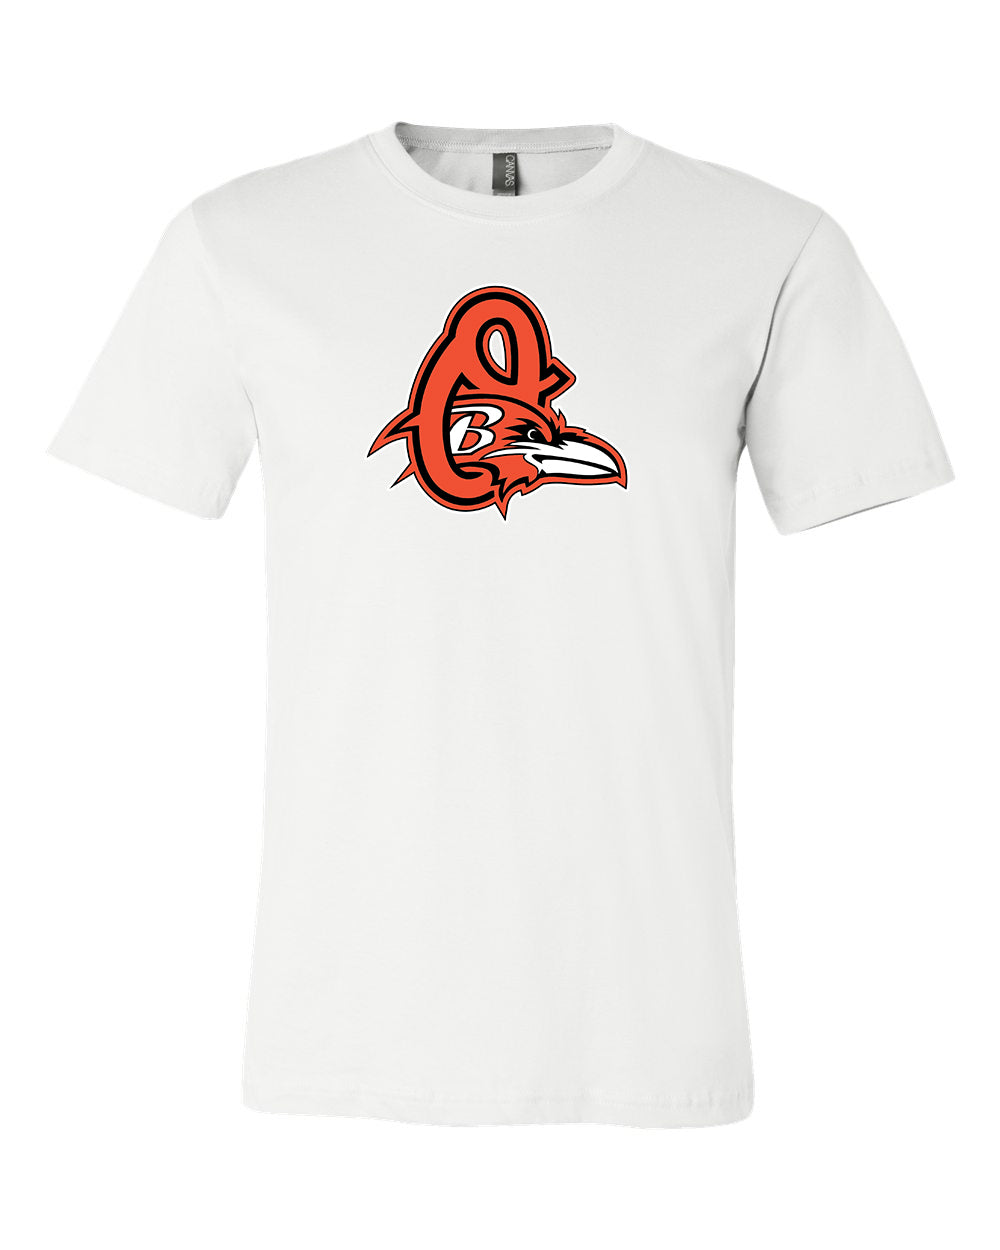 St Luis Cardinals logo Distressed Vintage logo T-shirt 6 Sizes S-3XL!!